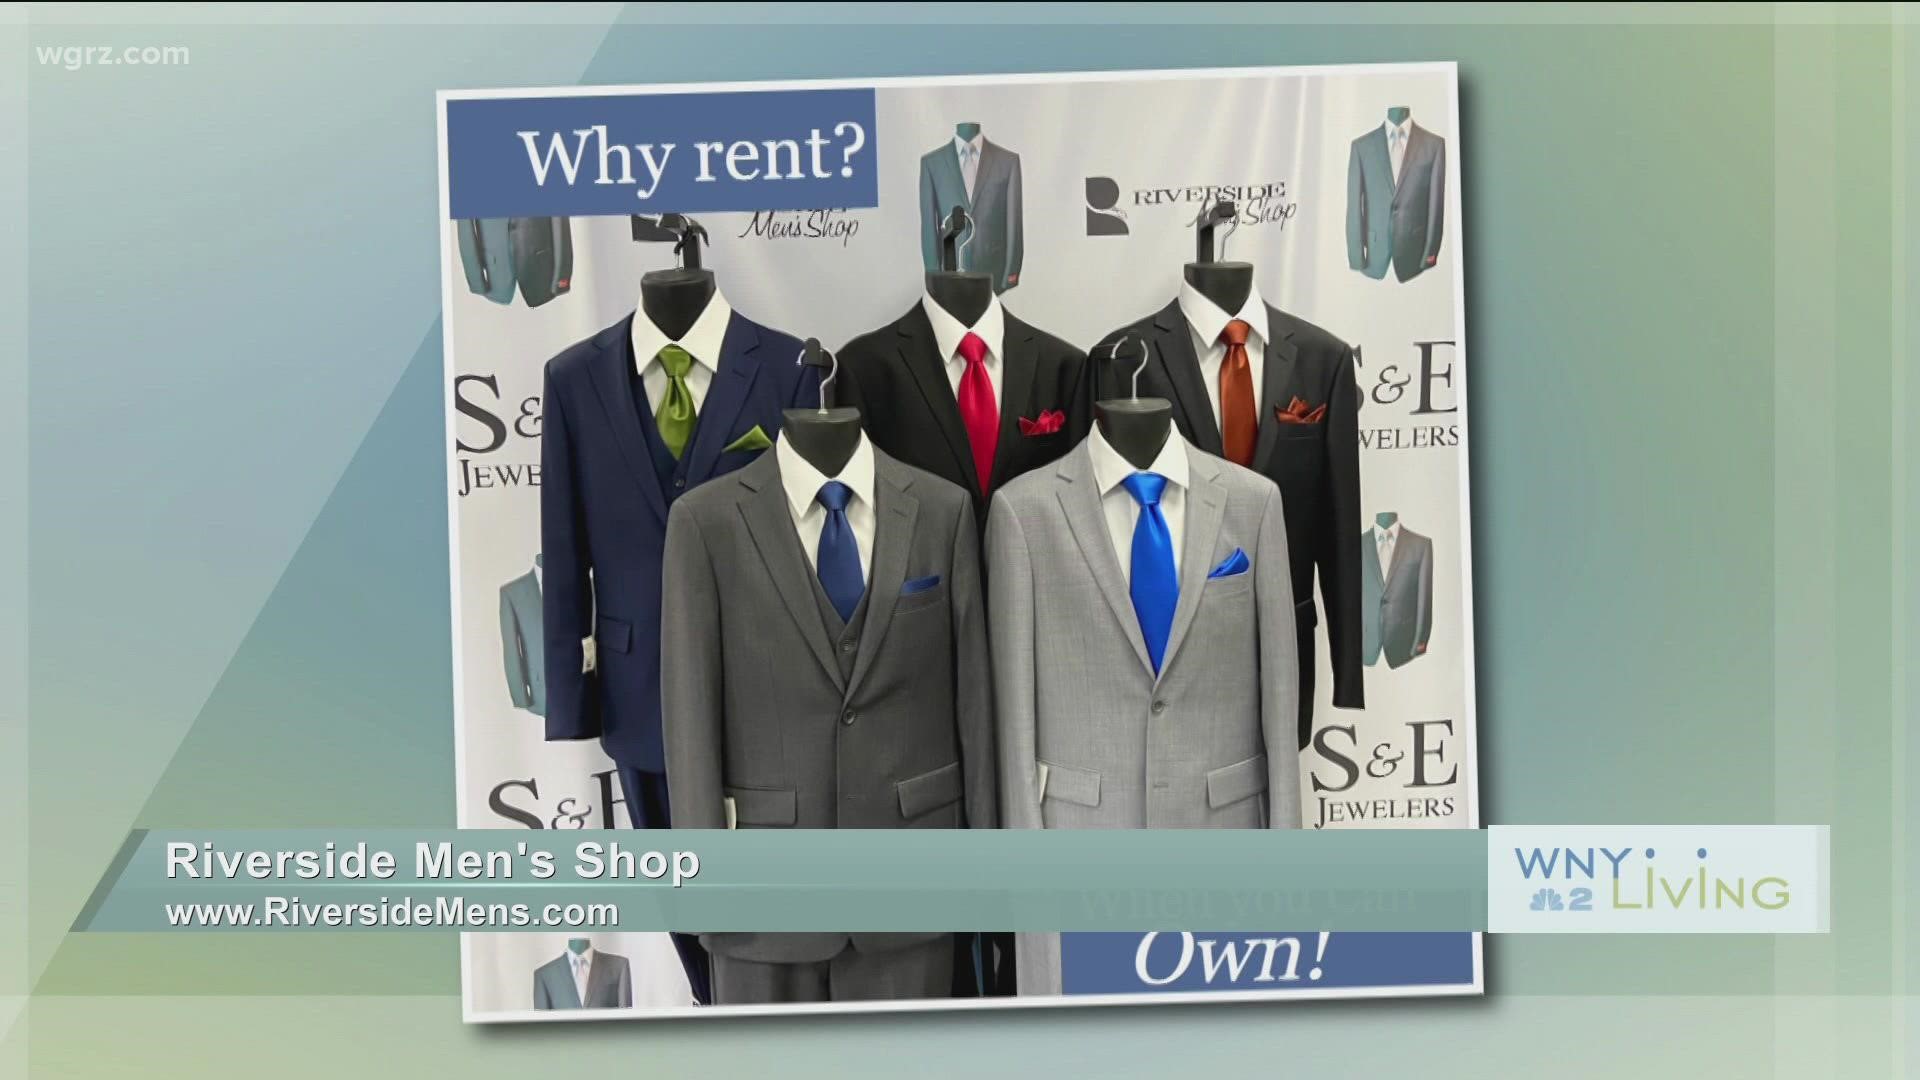 WNY Living - April 23 - Riverside Men's Shop & S&E Jewelers (THIS VIDEO IS SPONSORED BY RIVERSIDE MEN'S SHOP & S&E JEWELERS)